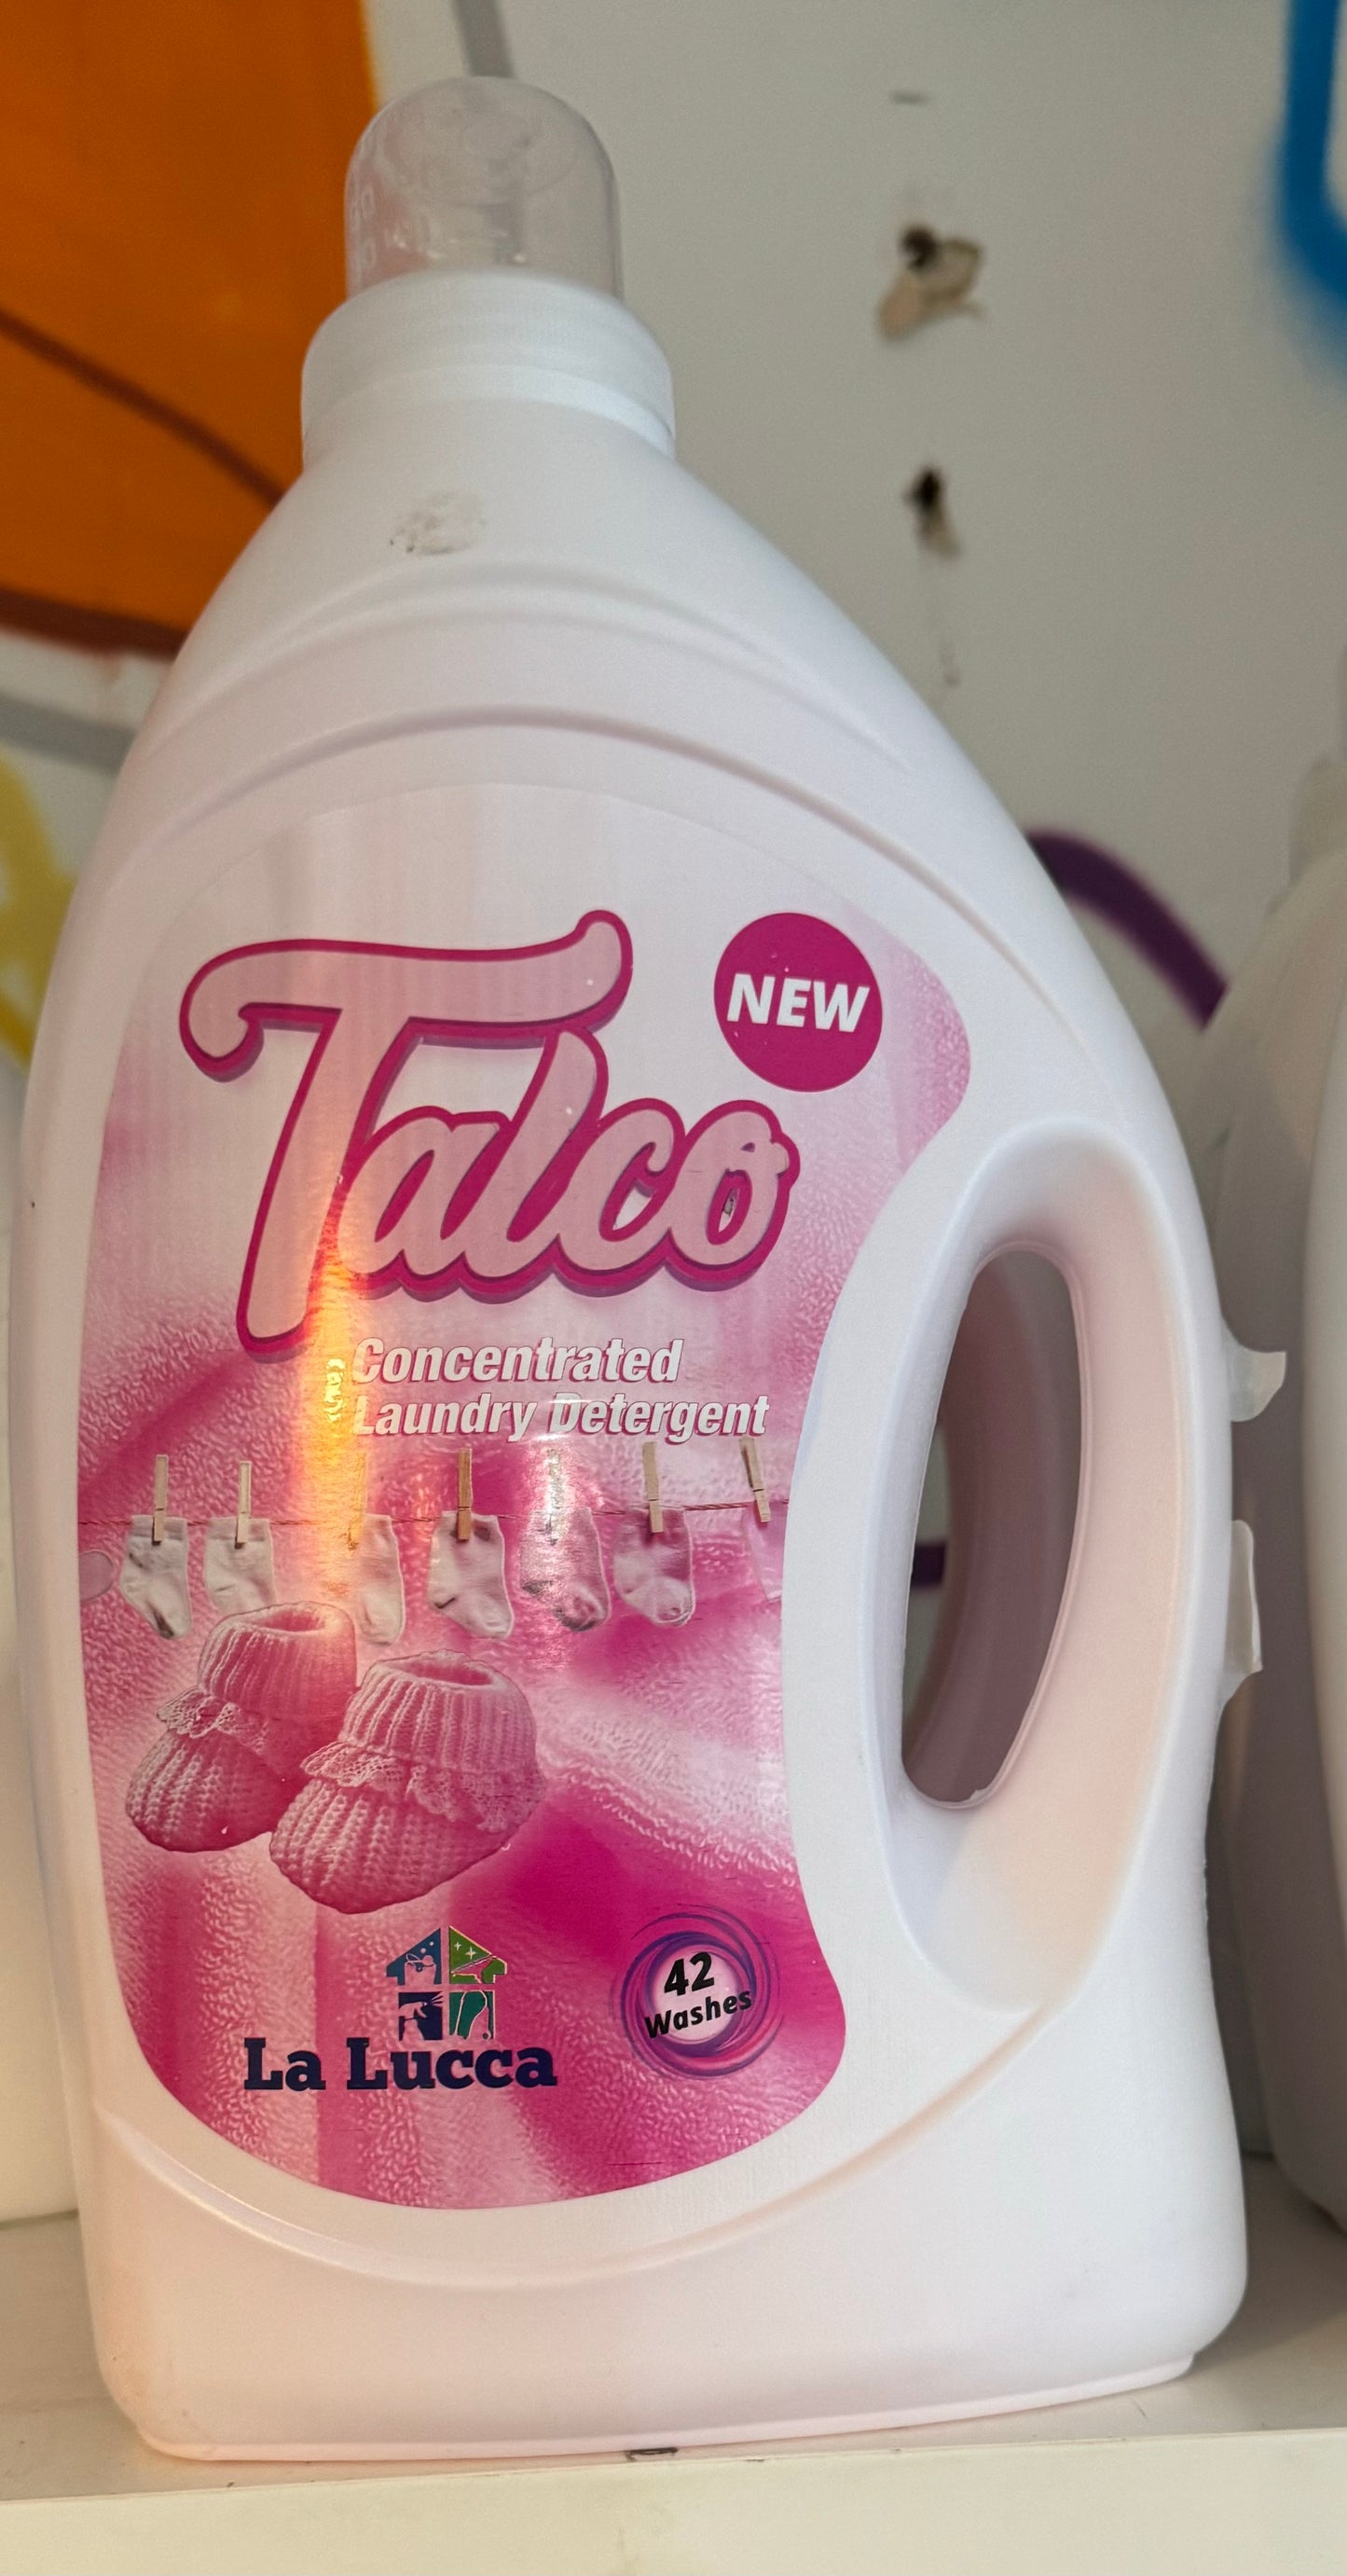 Talco detergent